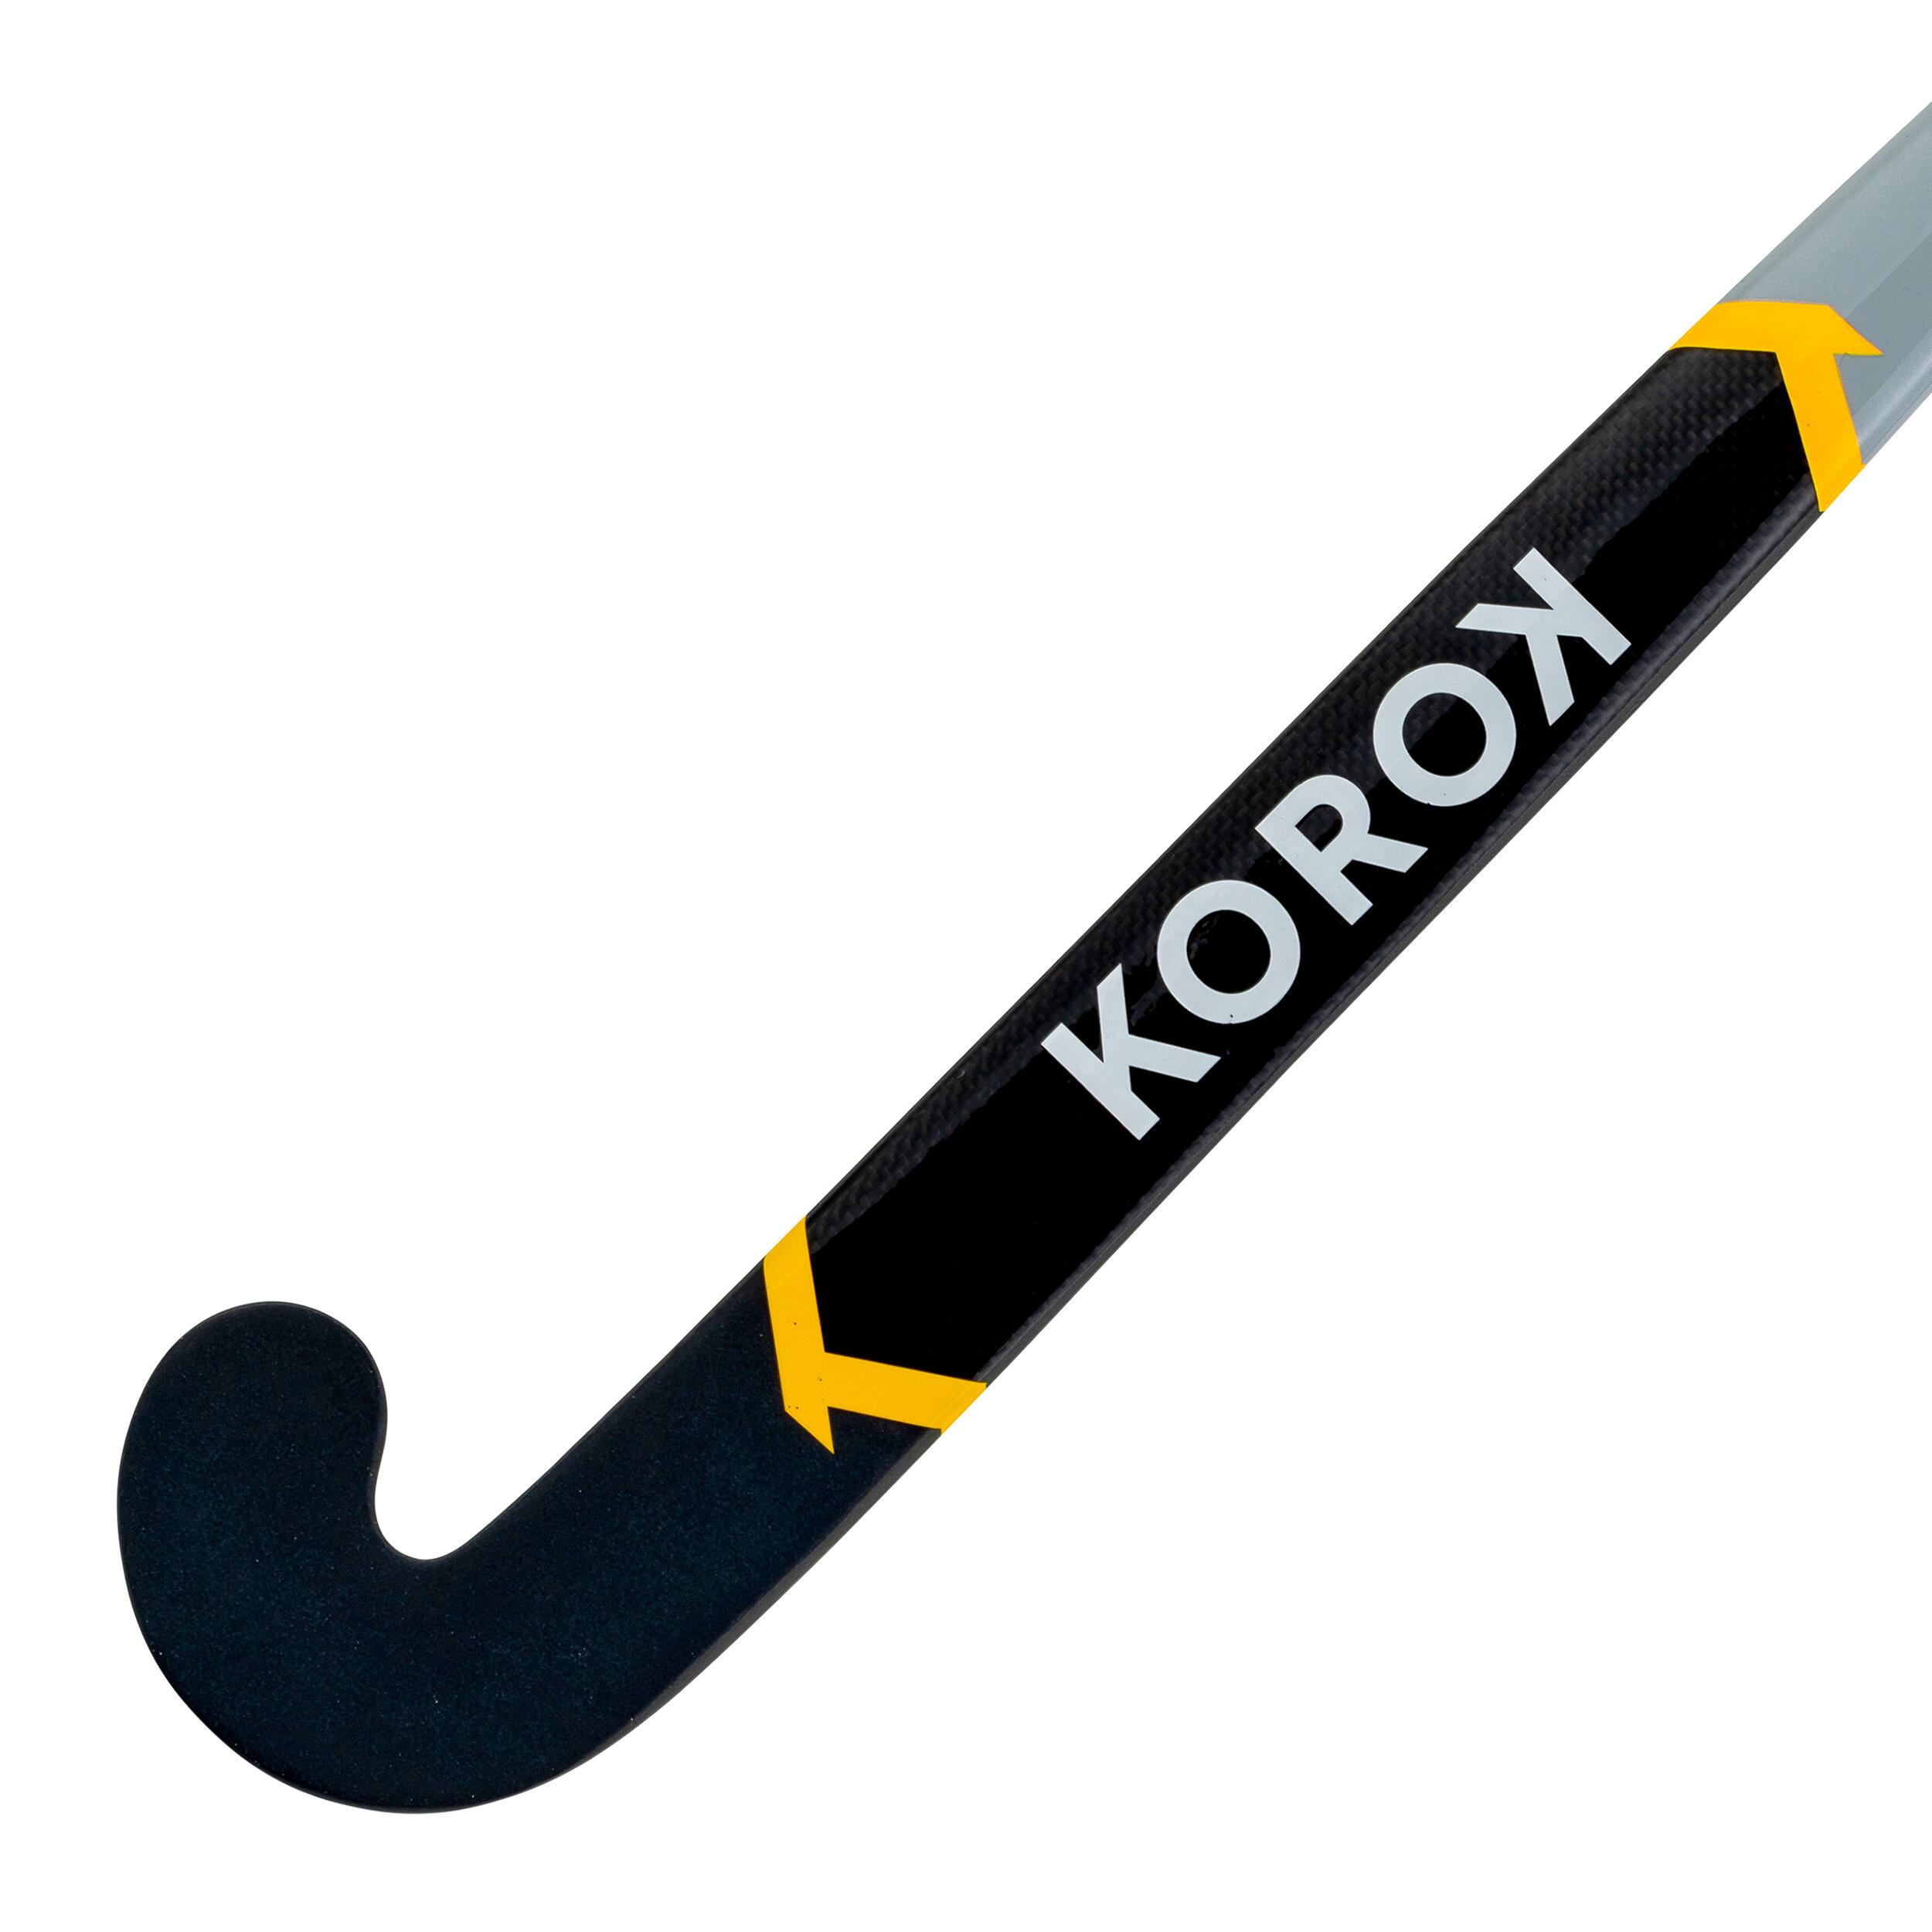 Adult Intermediate 30% Carbon Low Bow Field Hockey Stick FH530 - Grey/Yellow 4/12